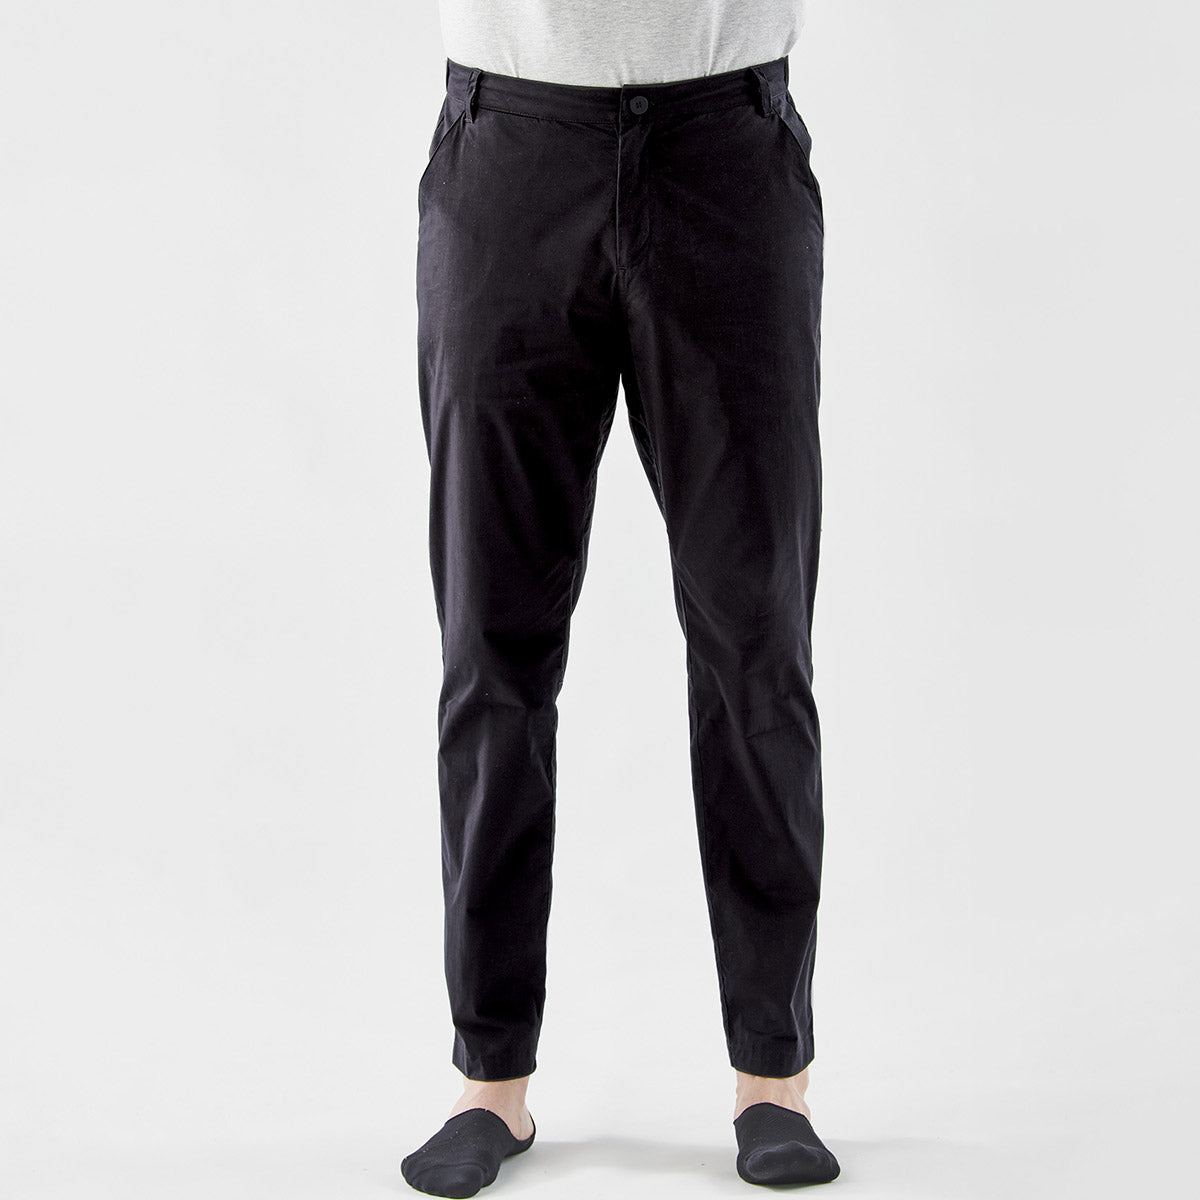 Buy Black Trousers & Pants for Men by Kabaat Online | Ajio.com